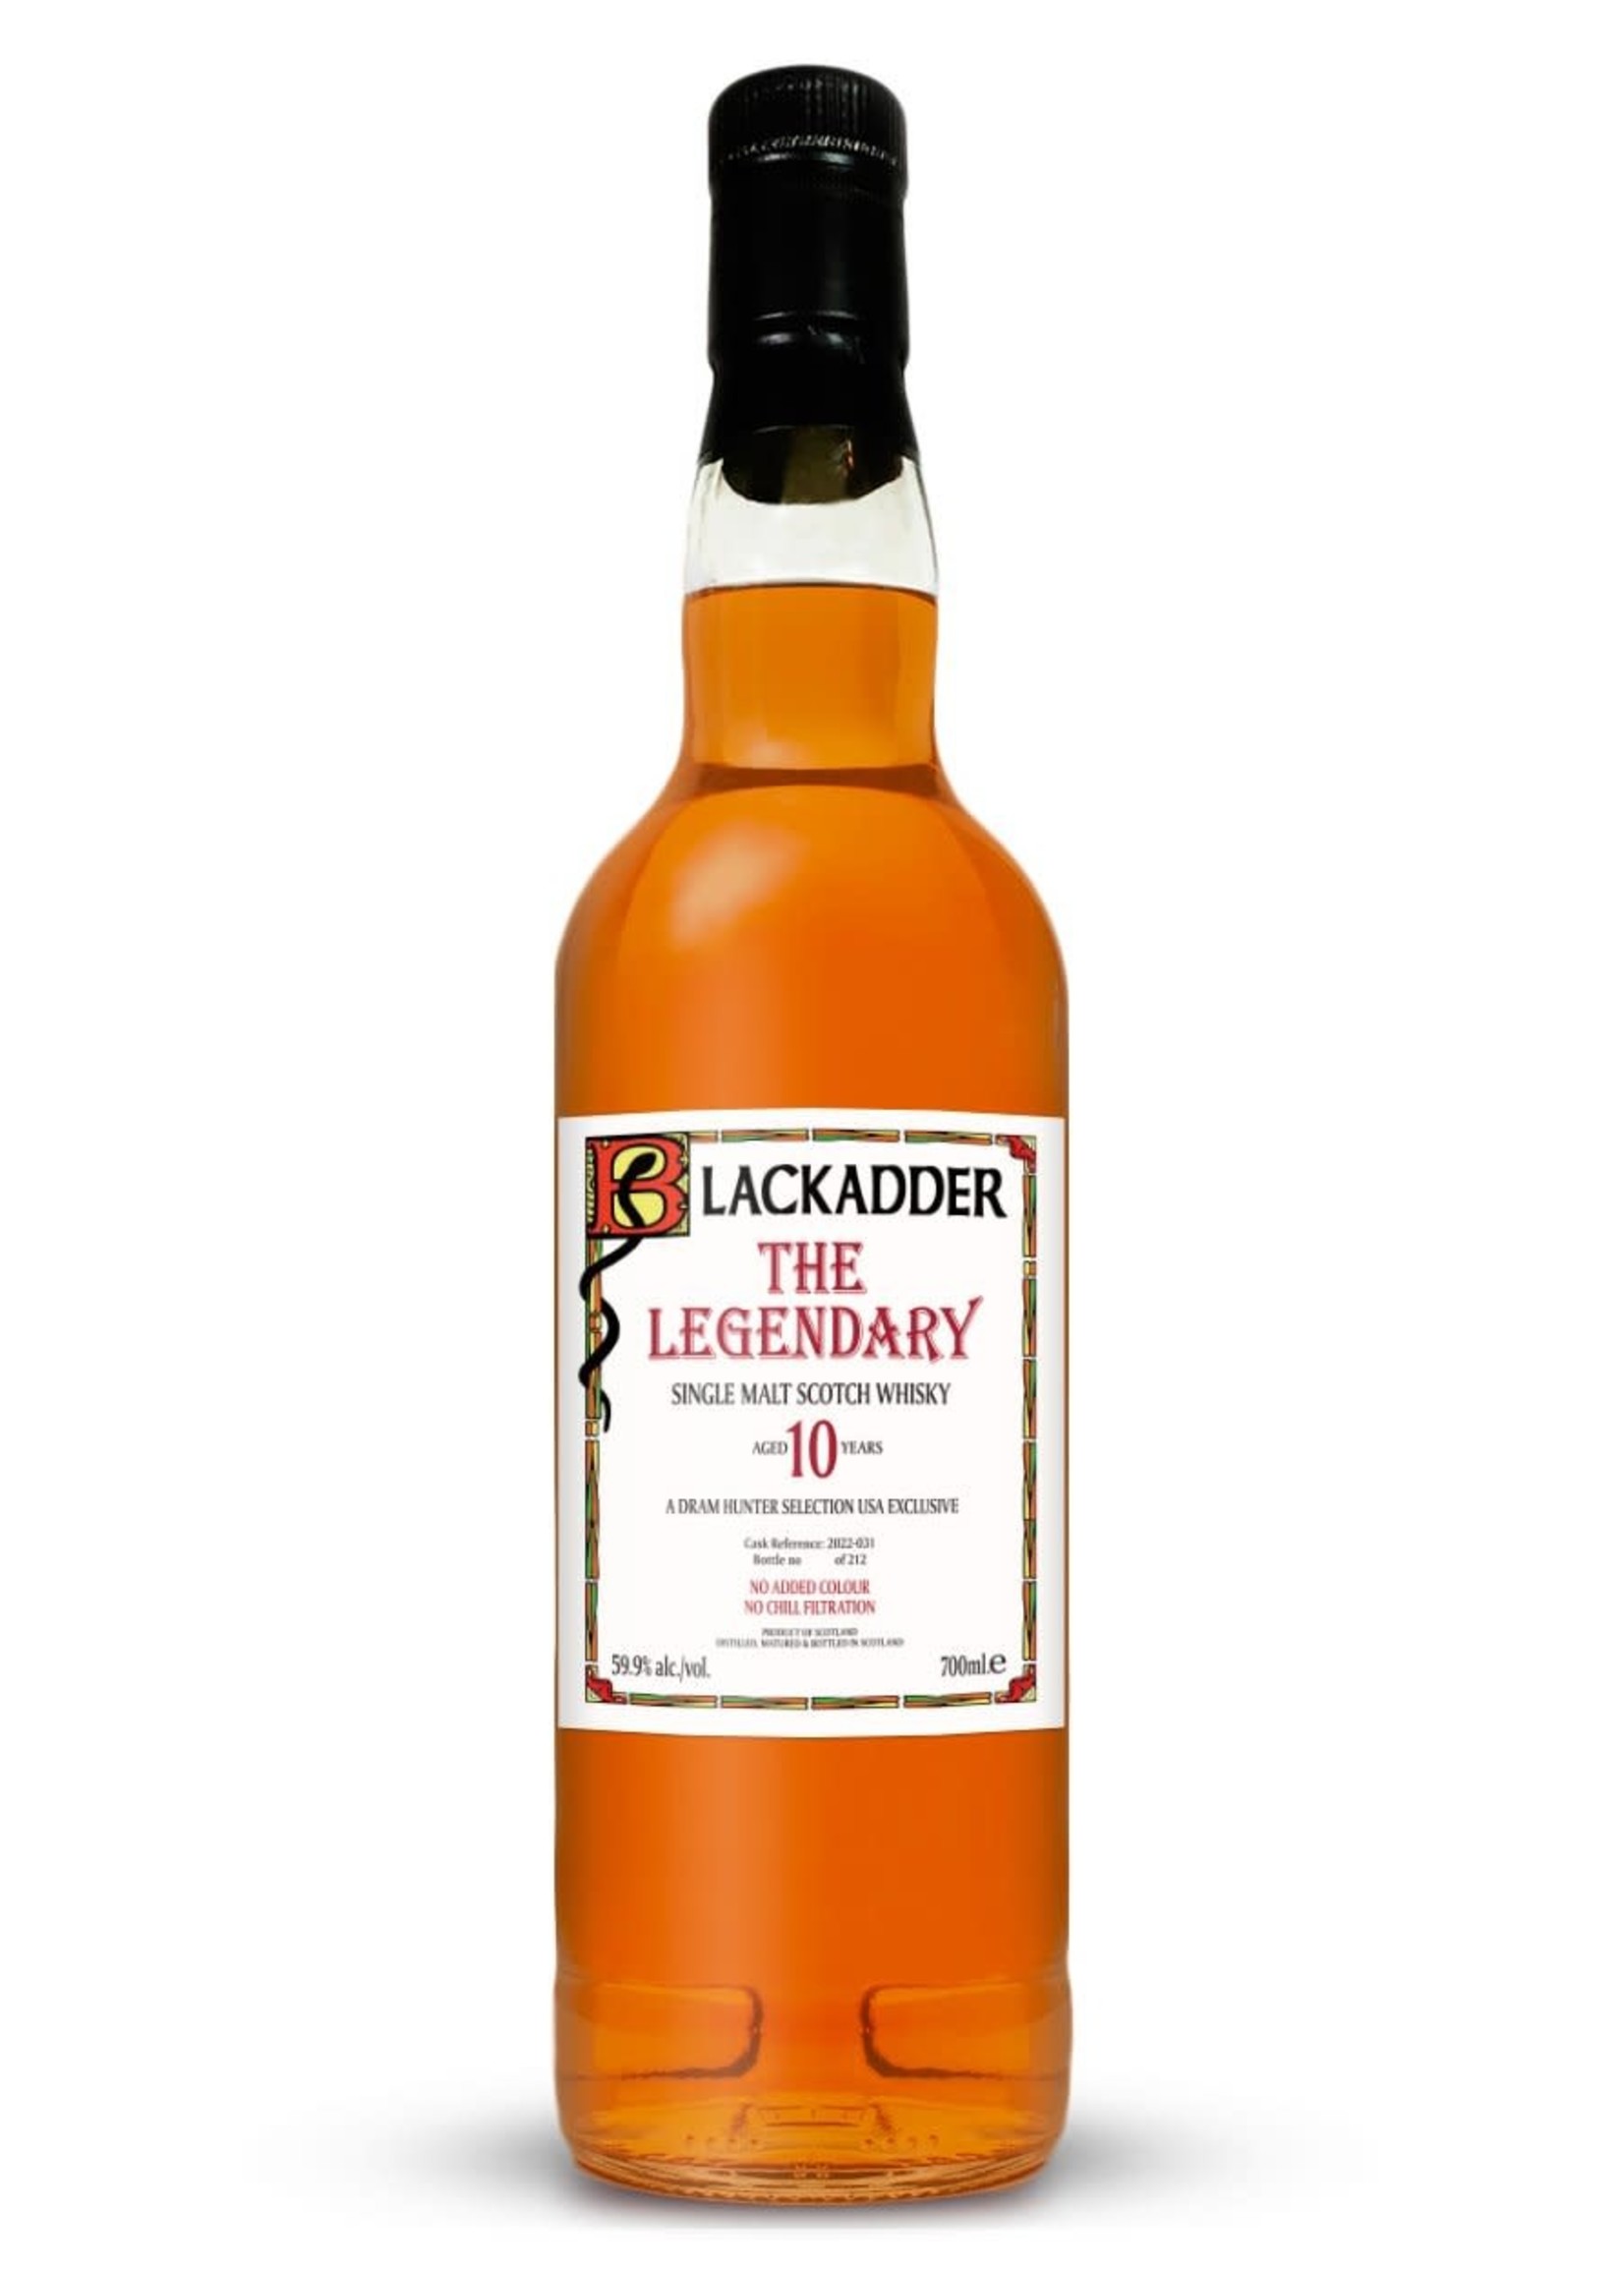 Blackadder Blackadder / The Legendary 10 Year Single Cask Single Malt Scotch Whisky 59.9% abv / 700mL